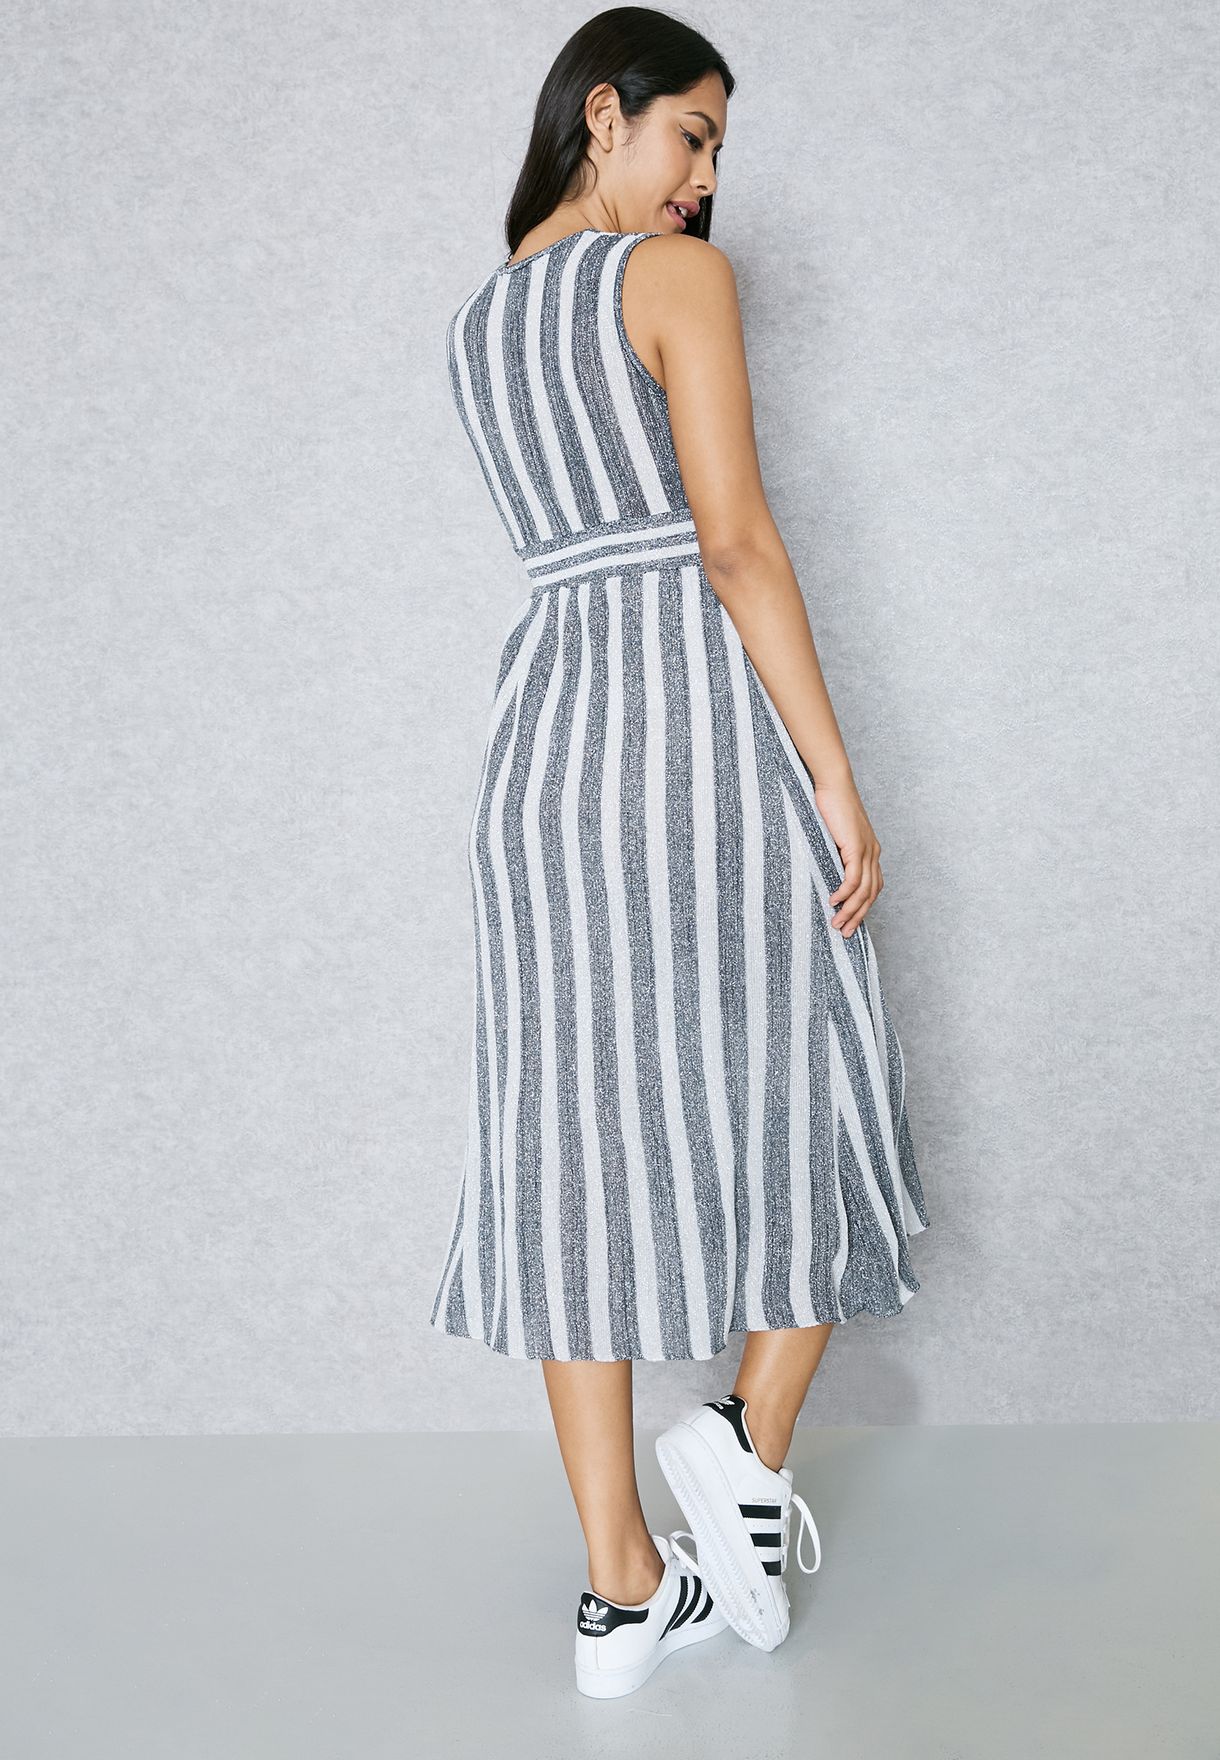 Shimmer Striped Dress